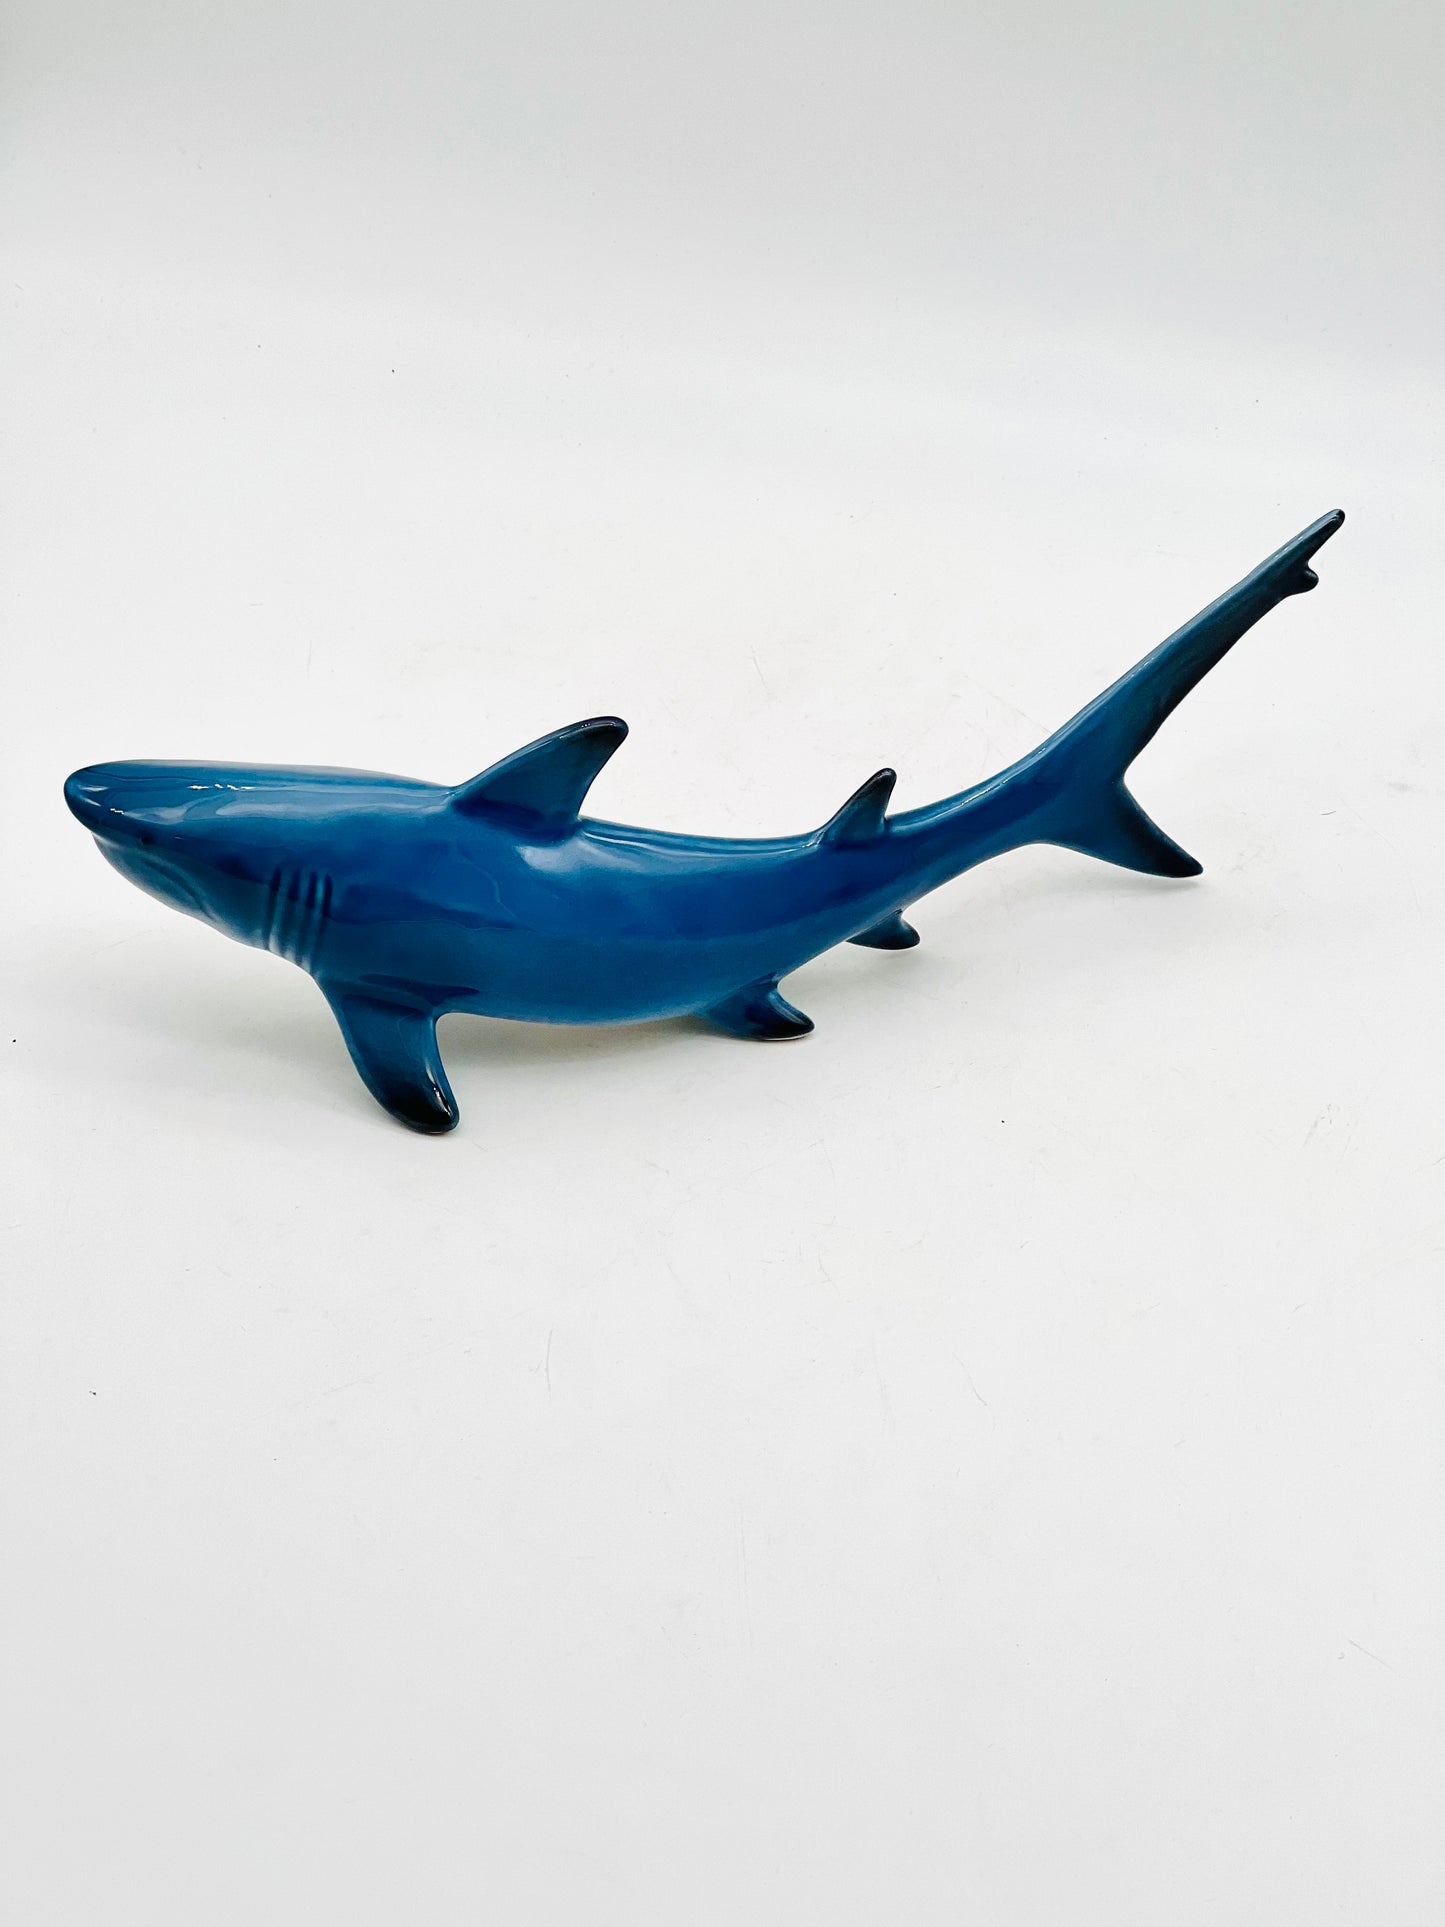 Tiburón de cerámica